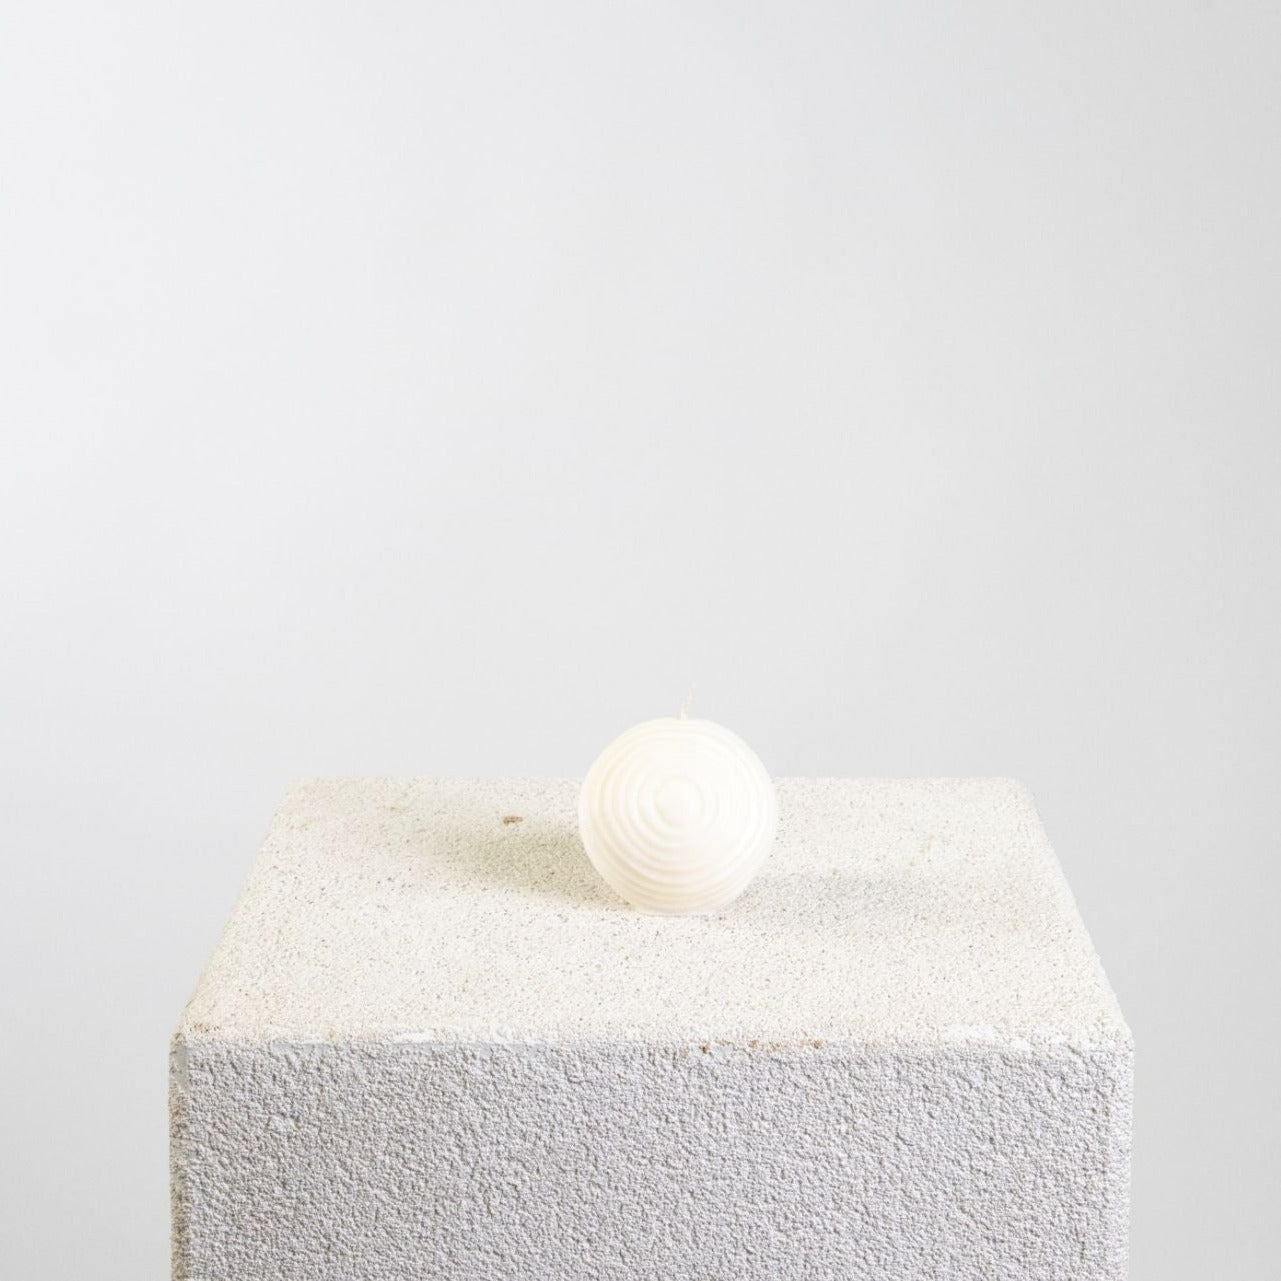 Contour Ball Sculptural Soy Wax Candle | Candle, Decor | Studio McKenna